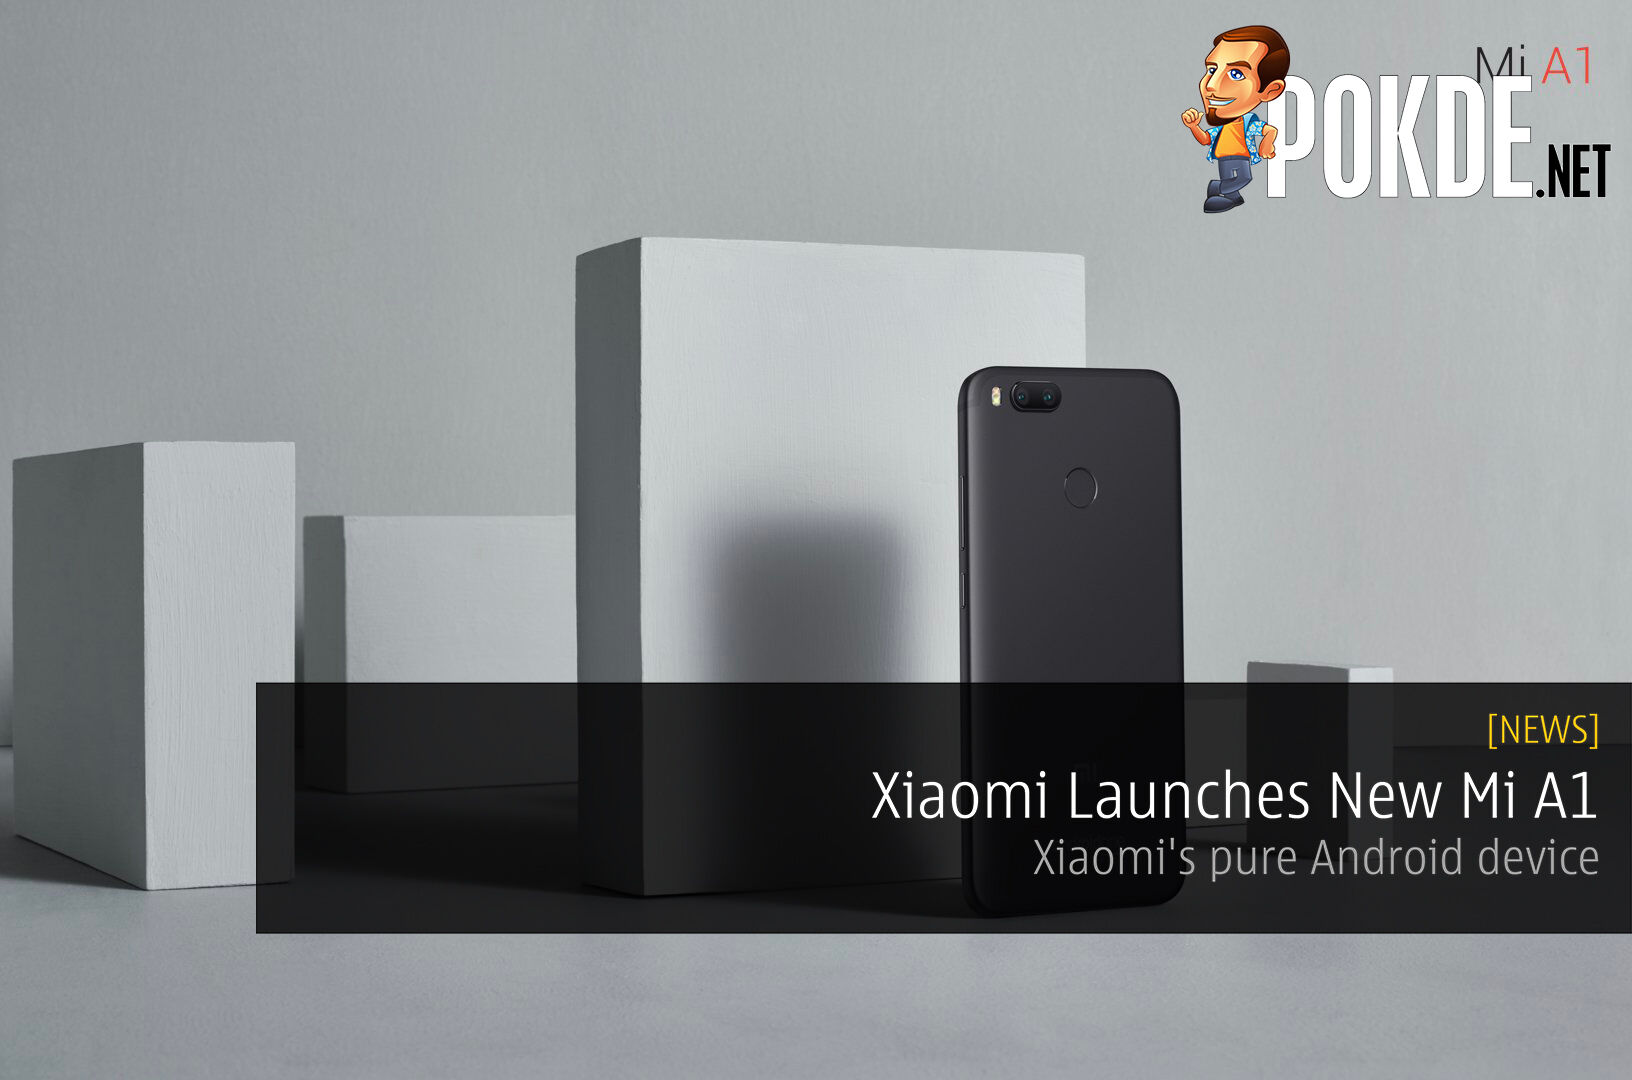 Xiaomi Launches New Mi A1 - Xiaomi's pure Android device 21